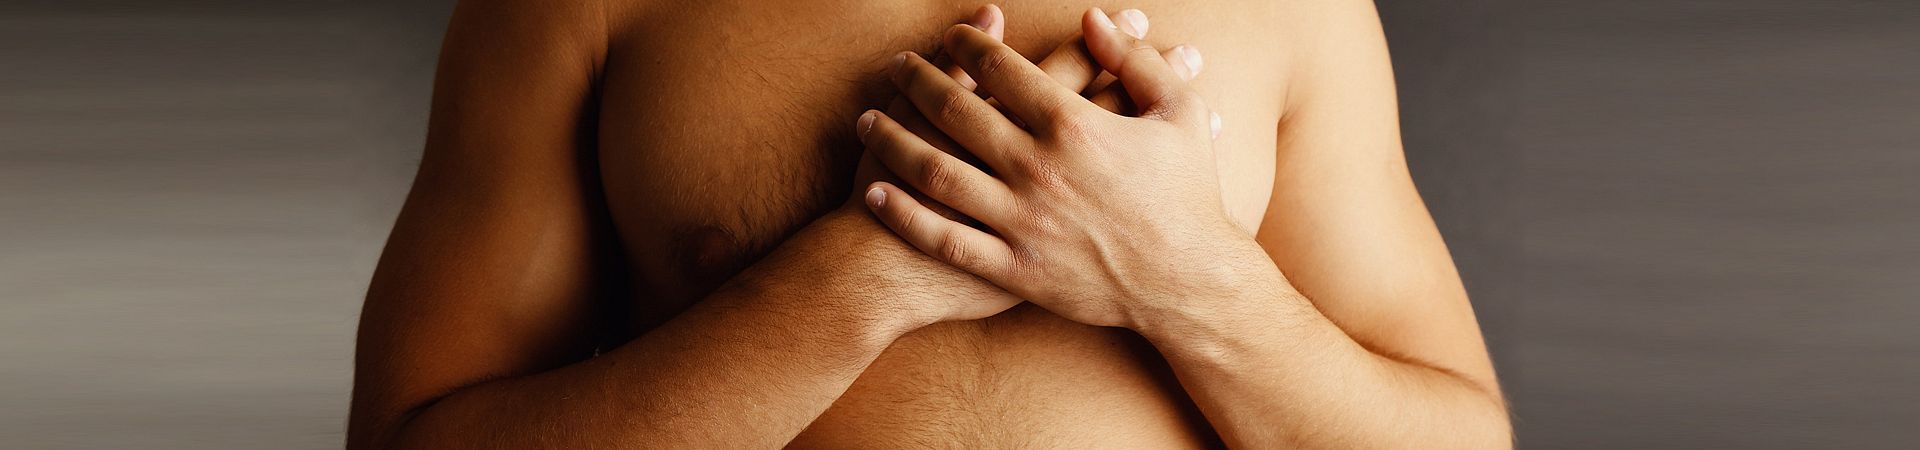 Gynäkomastie - Männer Brust Fettabsaugung